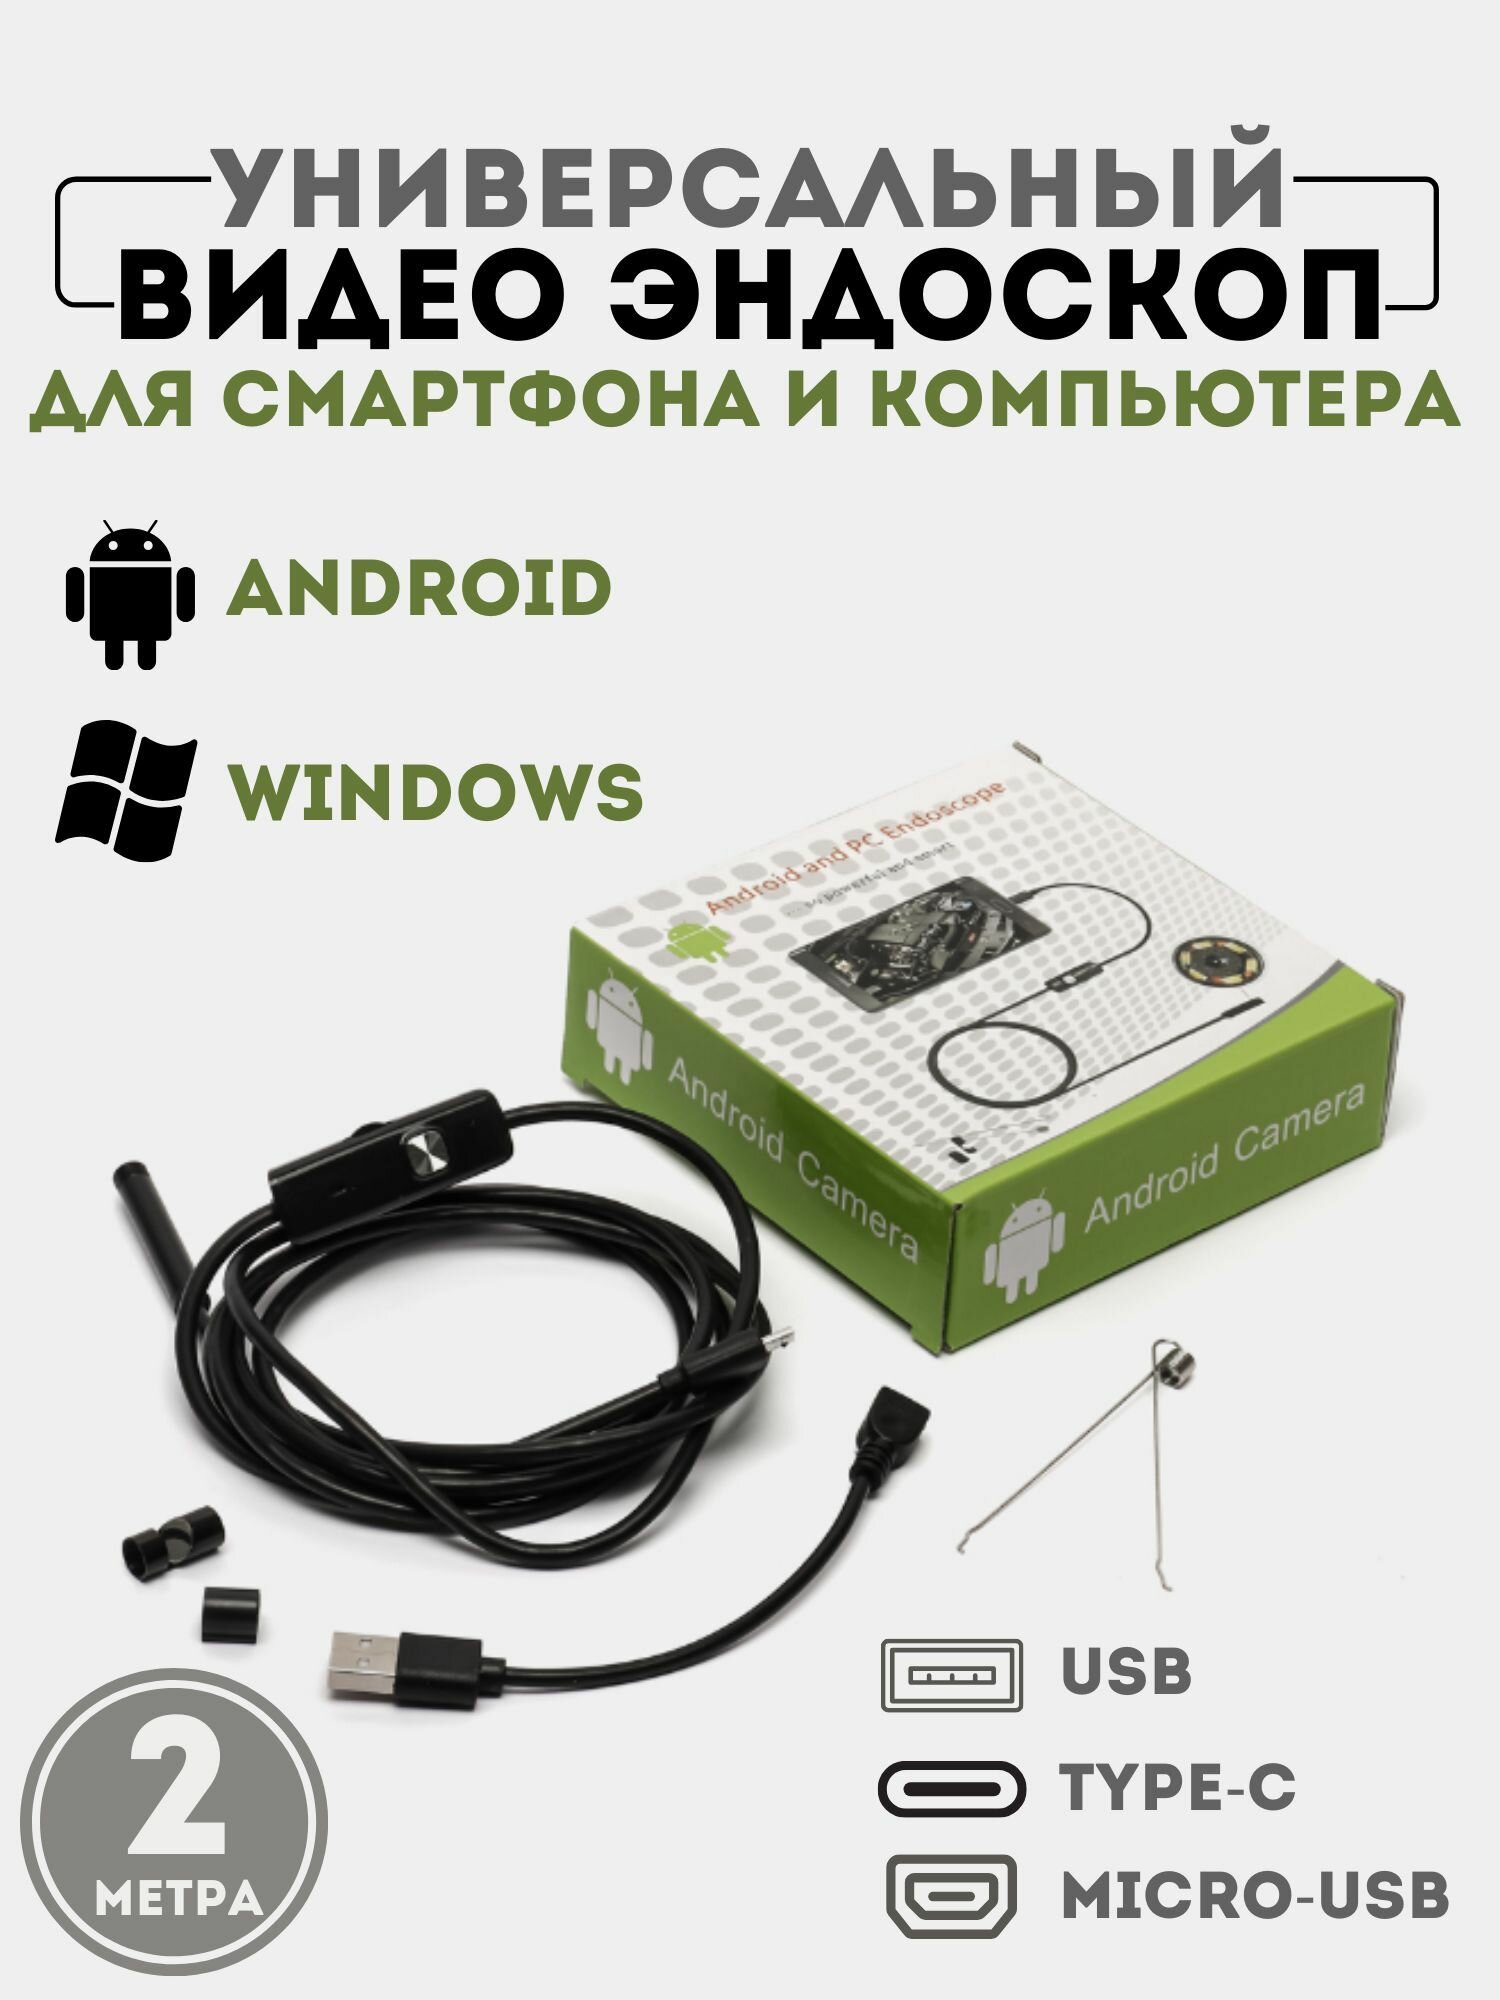 Эндоскоп (камера) для андроид "Android" (микро-usb USB) длина кабеля 2 м